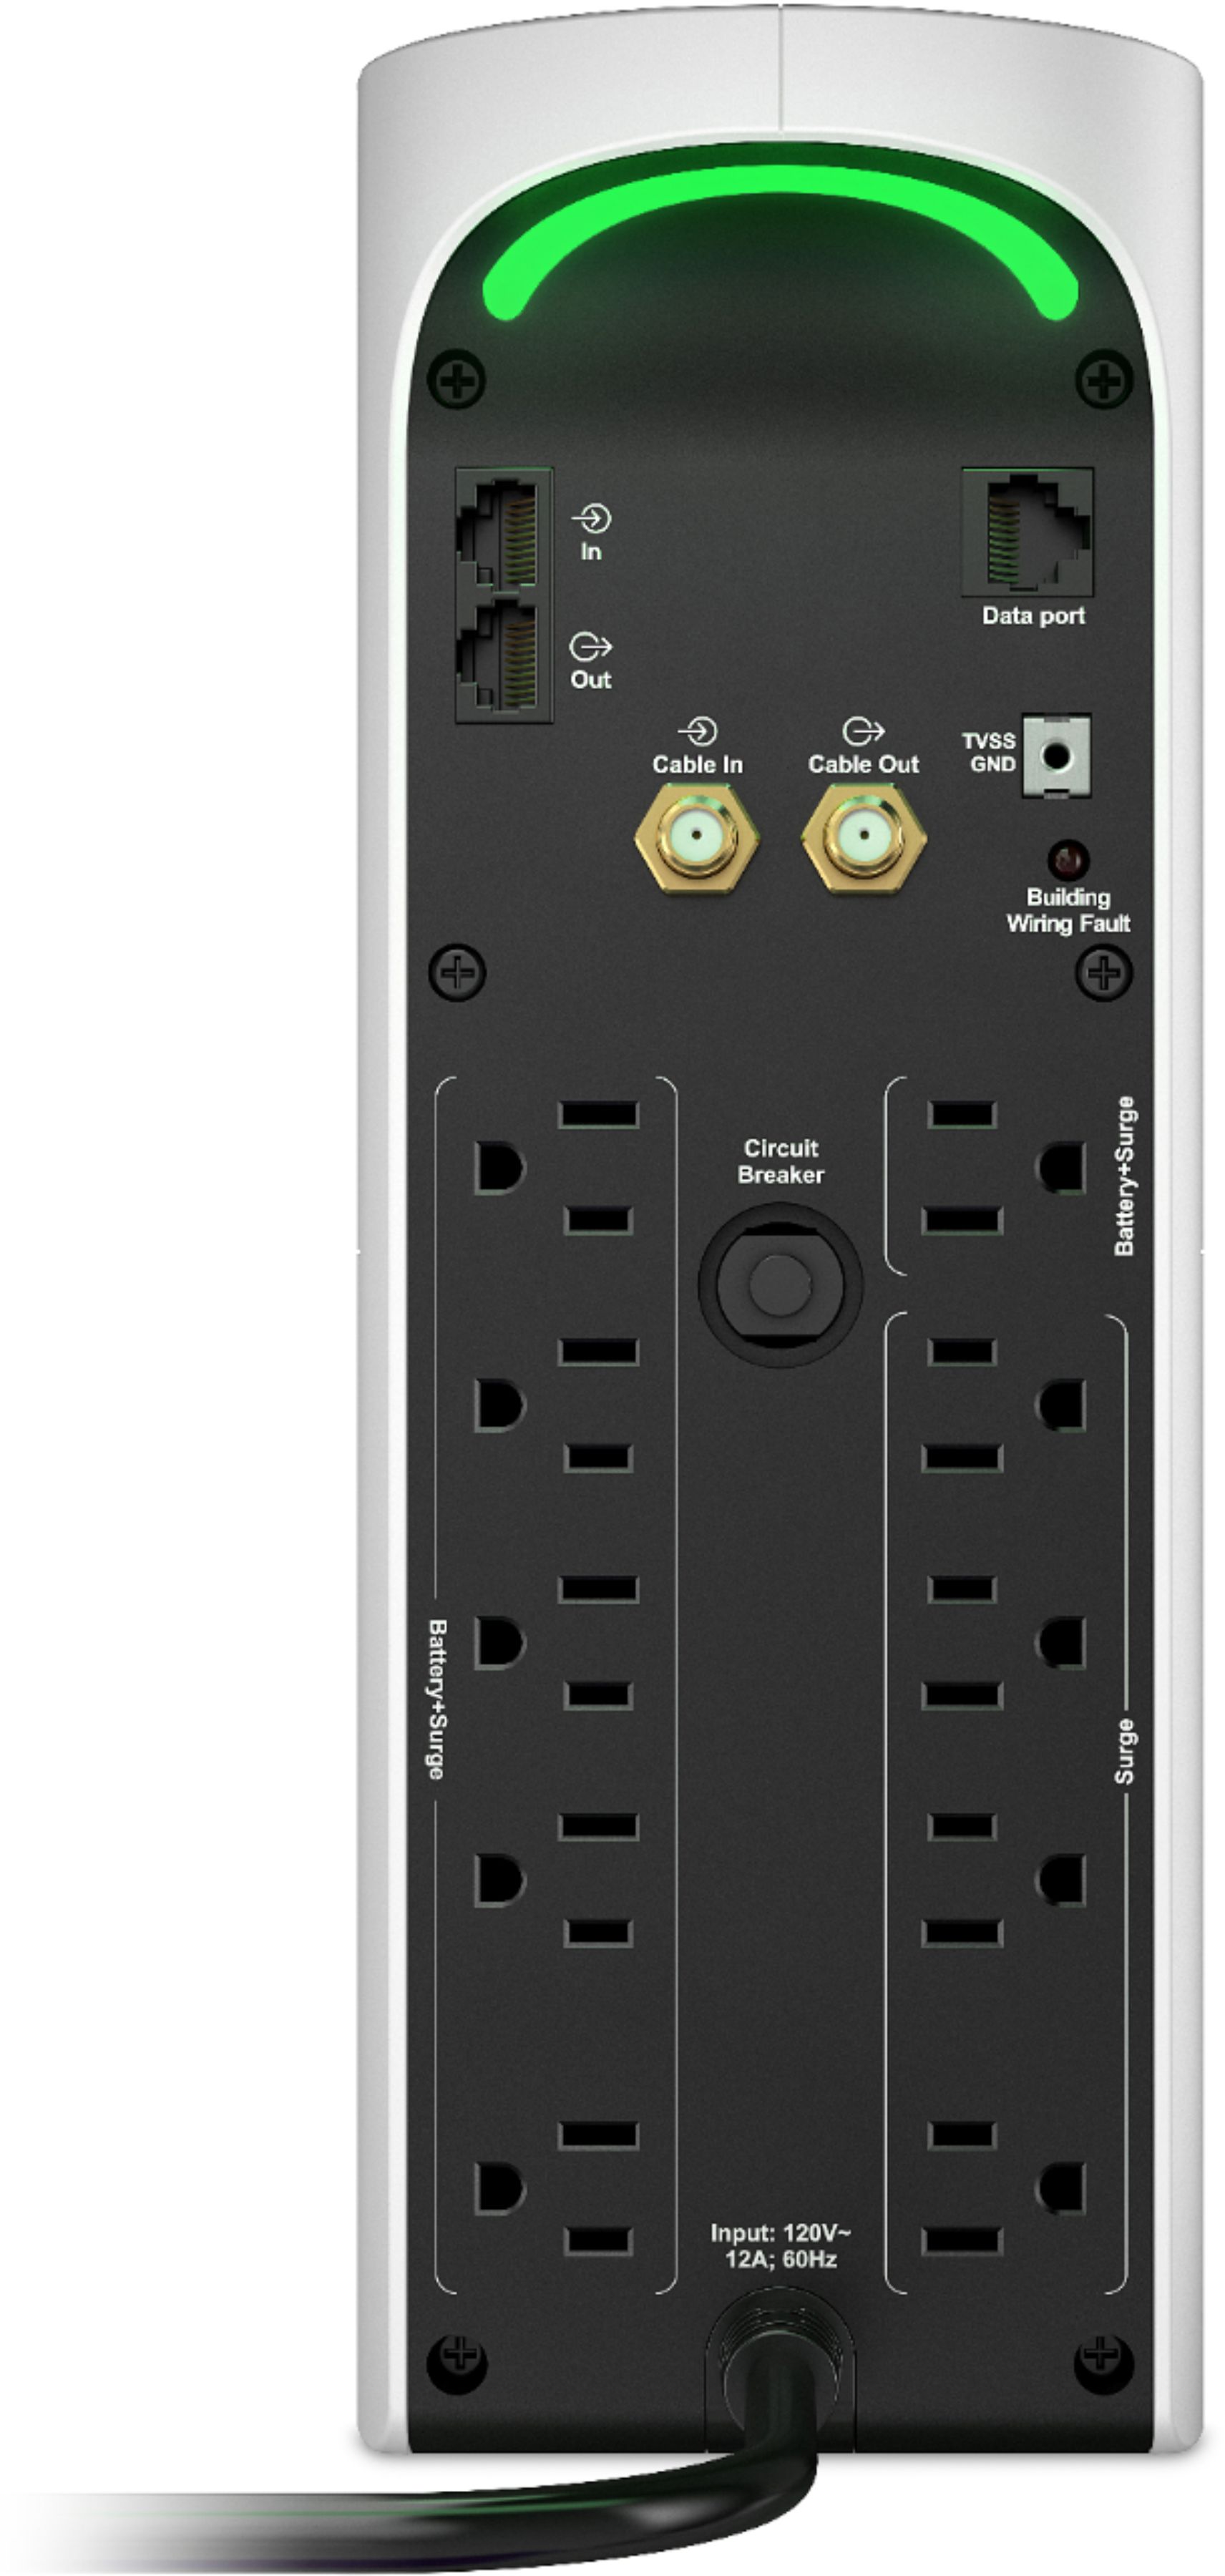 APC 1500VA UPS Battery Backup, Surge Protection - 600VA UPS Power Supply  Has 7 Outlets, USB Port